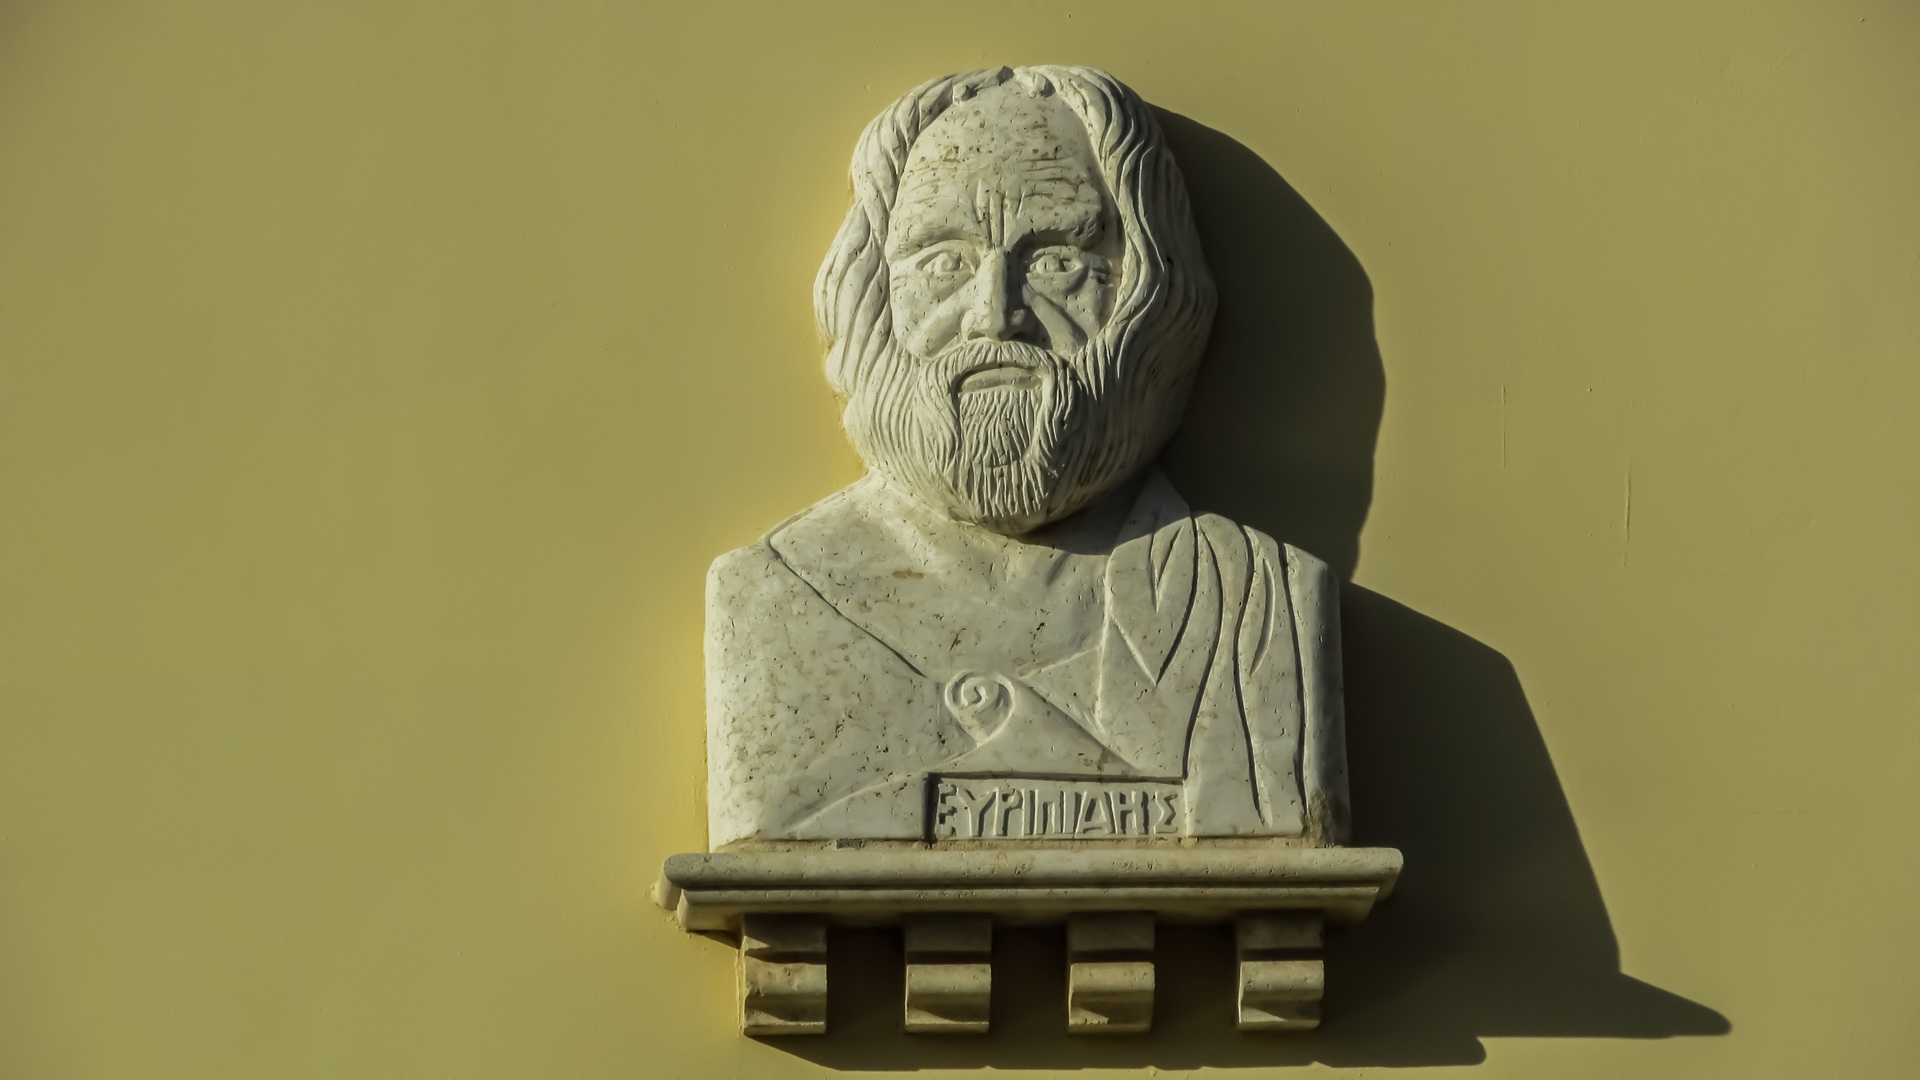 Sculpted bust of Kippocrates against olive background